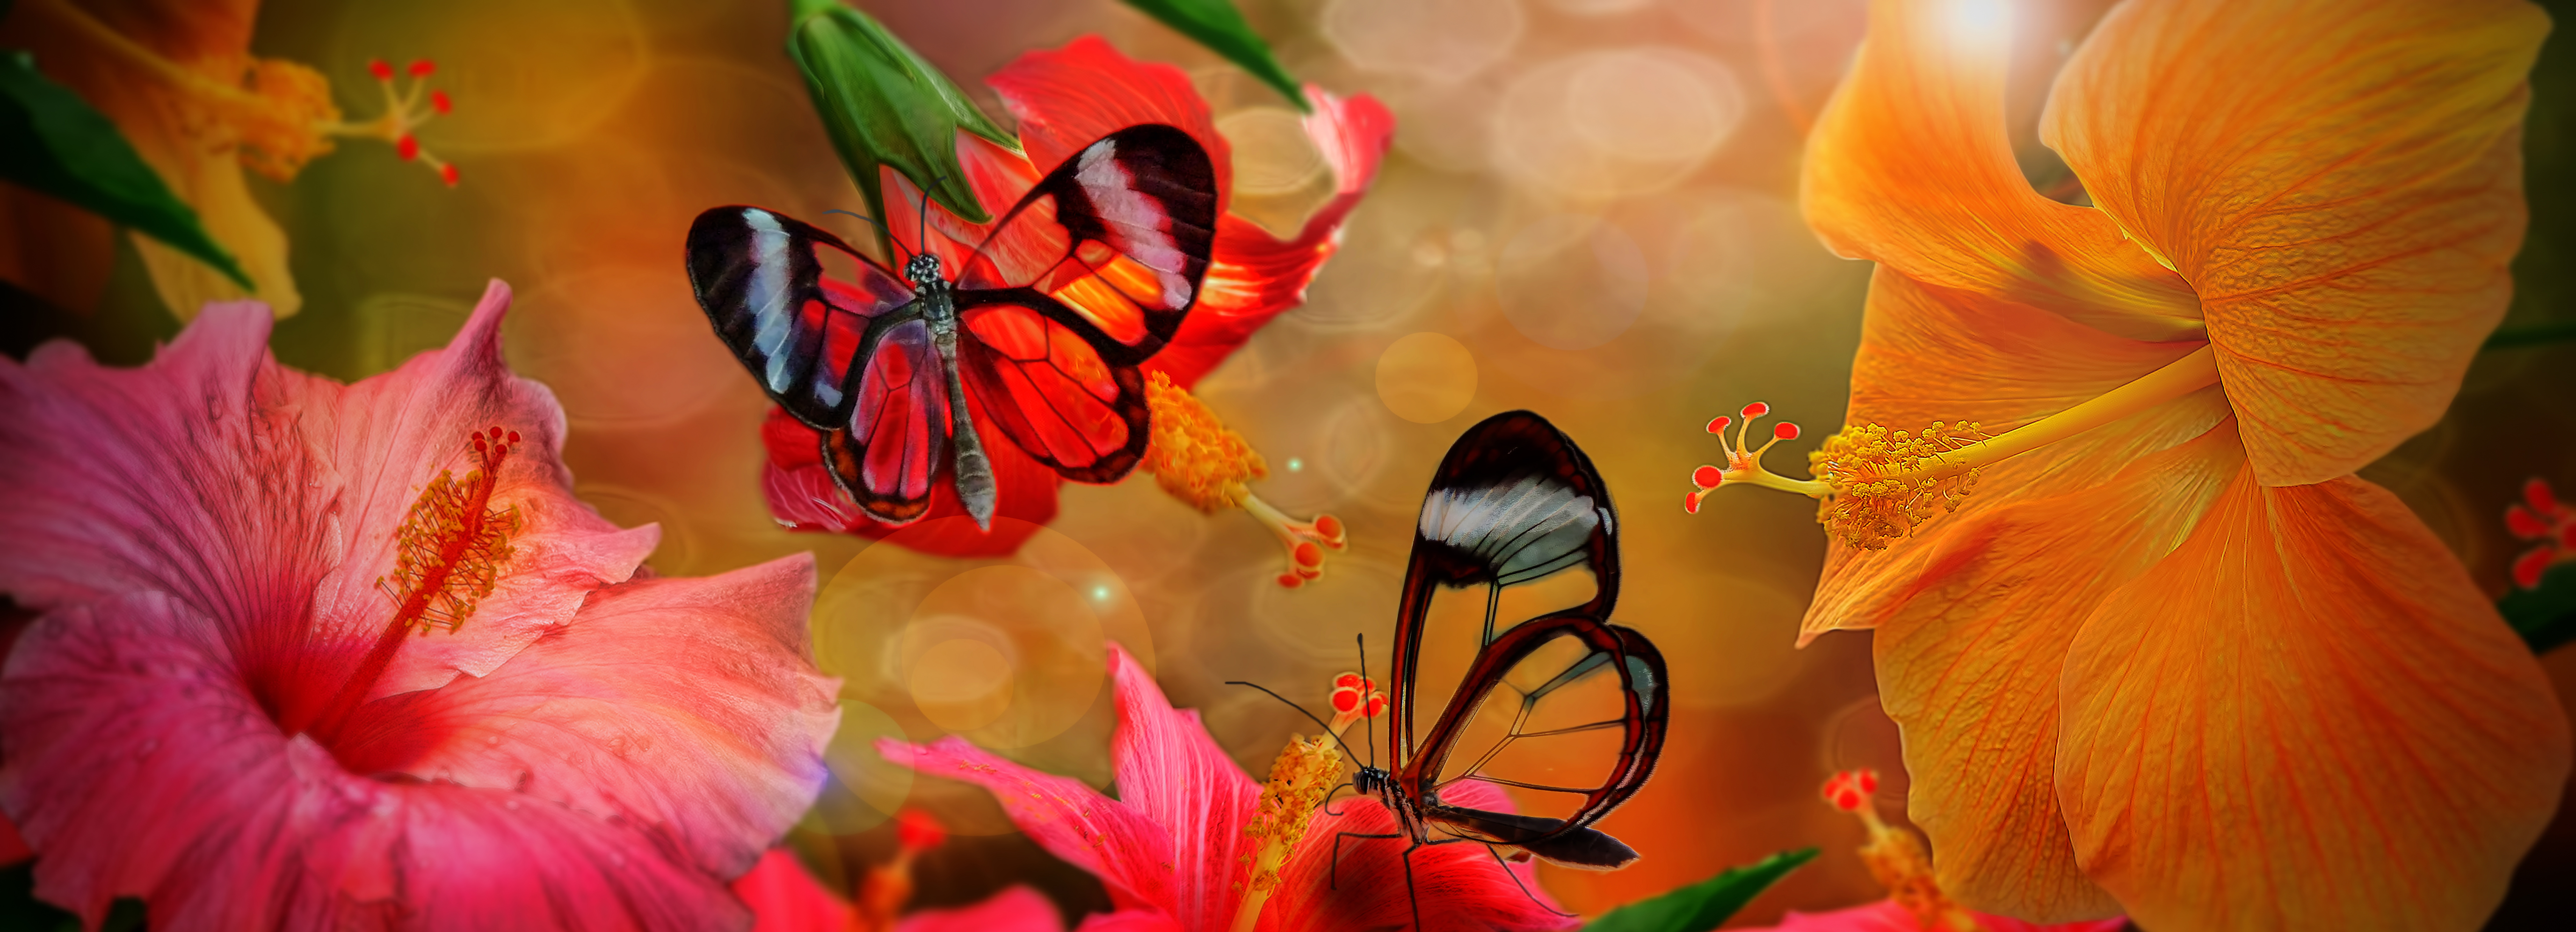 Wallpapers hibiscus butterflies a floral arrangement on the desktop